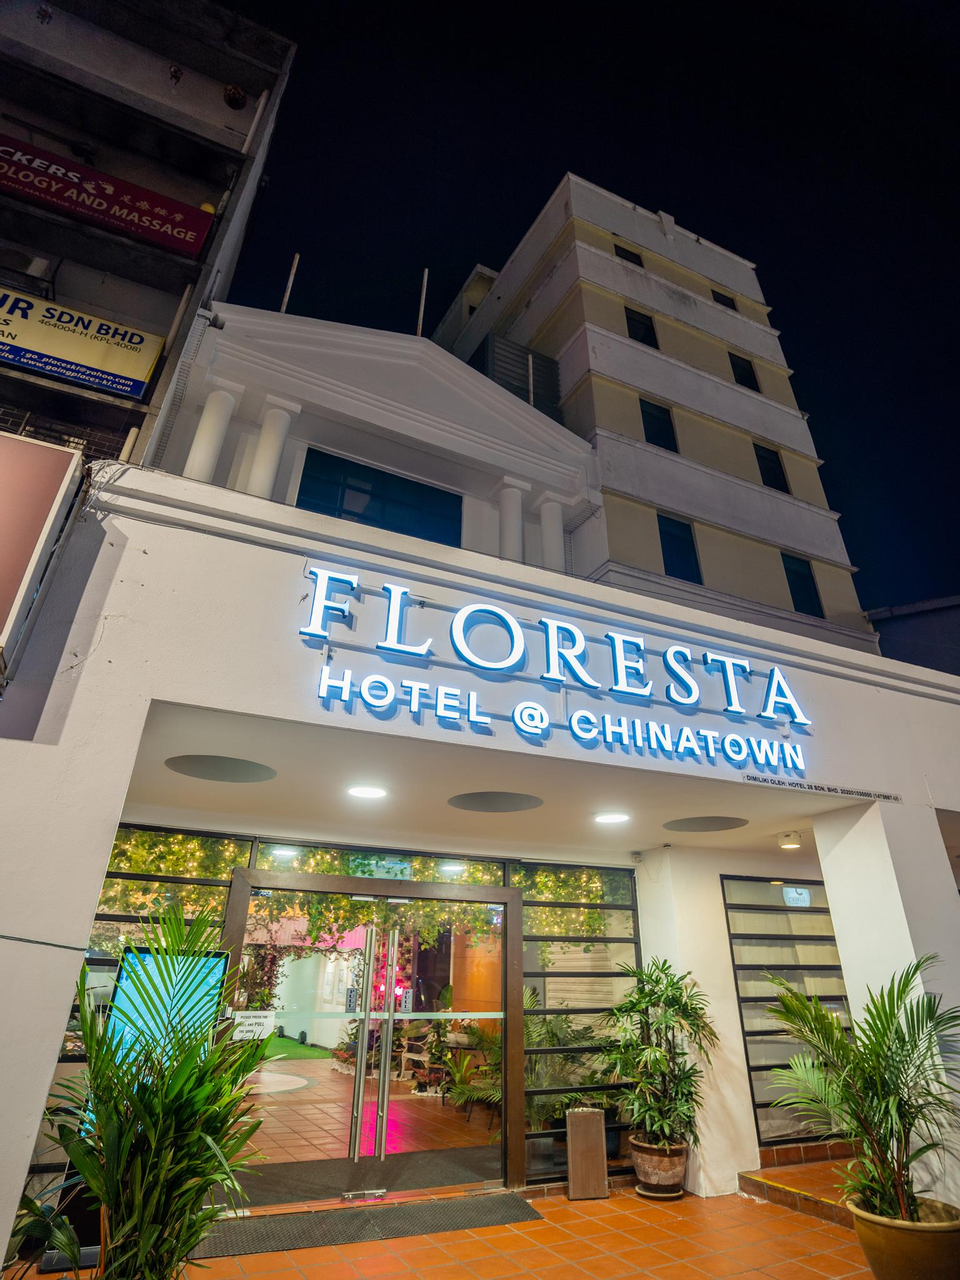 Exterior & Views 1, Floresta Hotel @ China Town, Kuala Lumpur